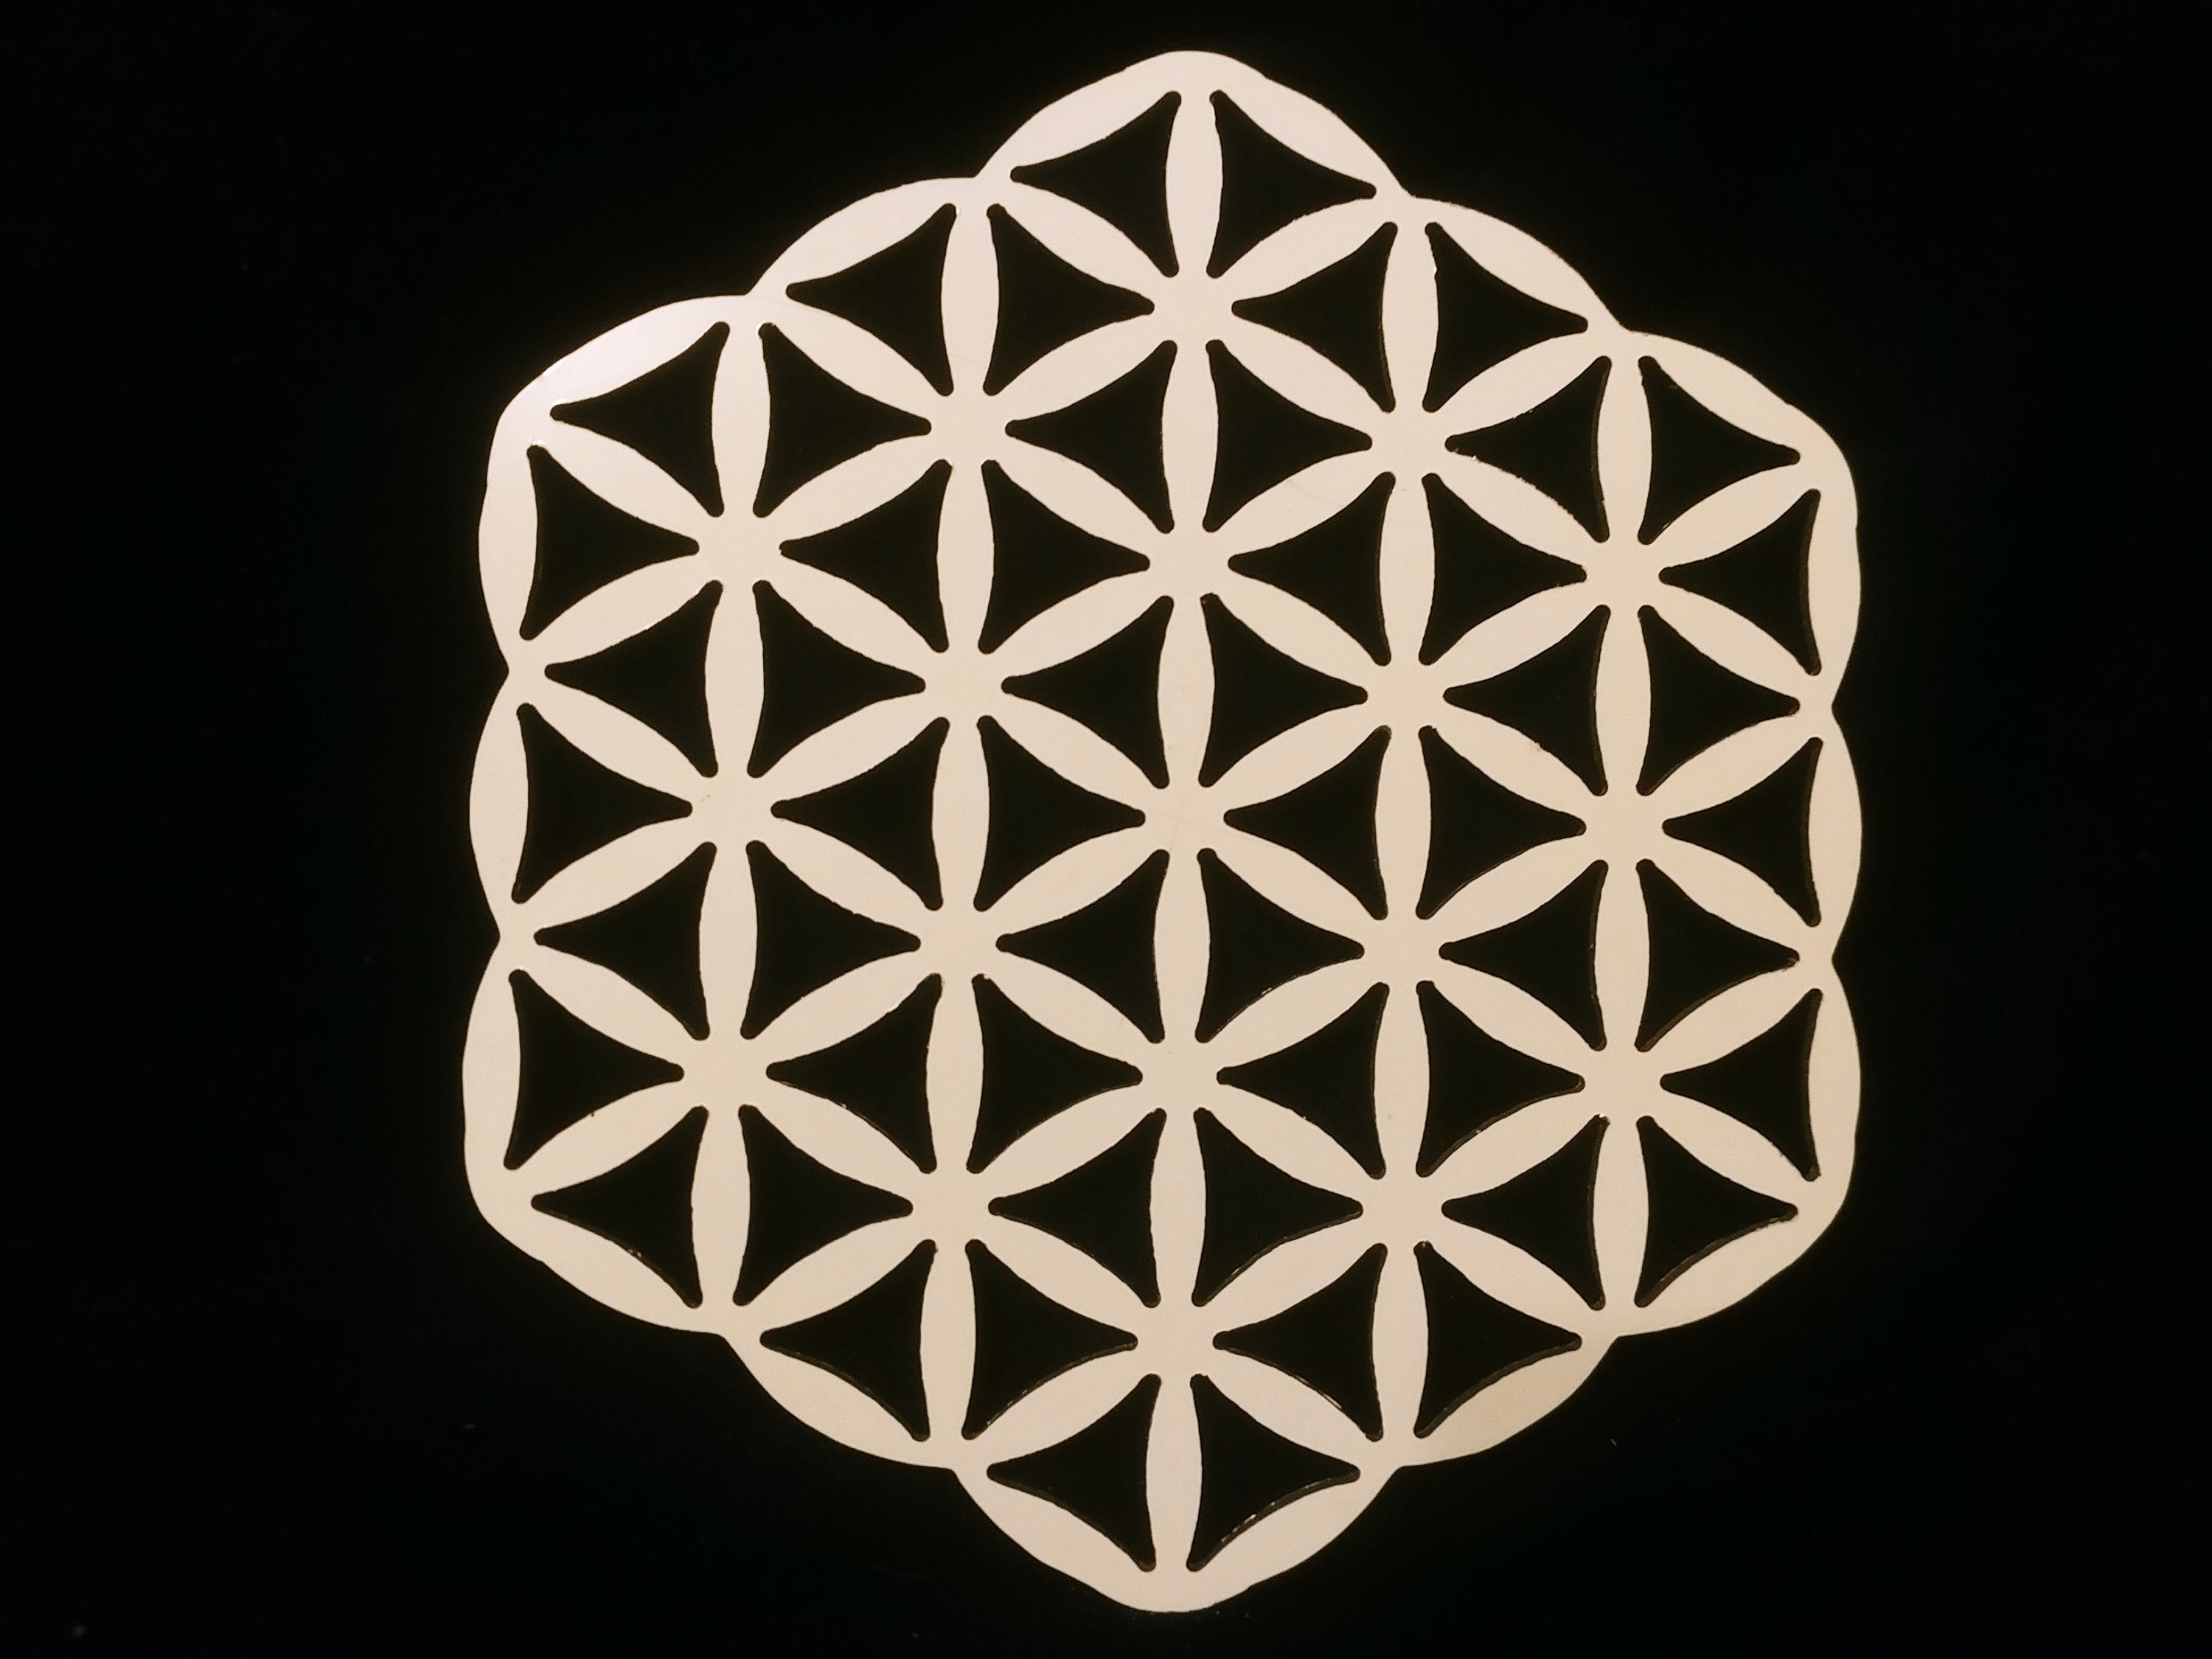 Leinuosen 4 Pcs 12 Inch Crystal Grid Board Sacred Geometry Wall Art Set  Metatron Cube, Flower of Life, Sri Yantra, 64 Star Tetrahedron Pagan Decor